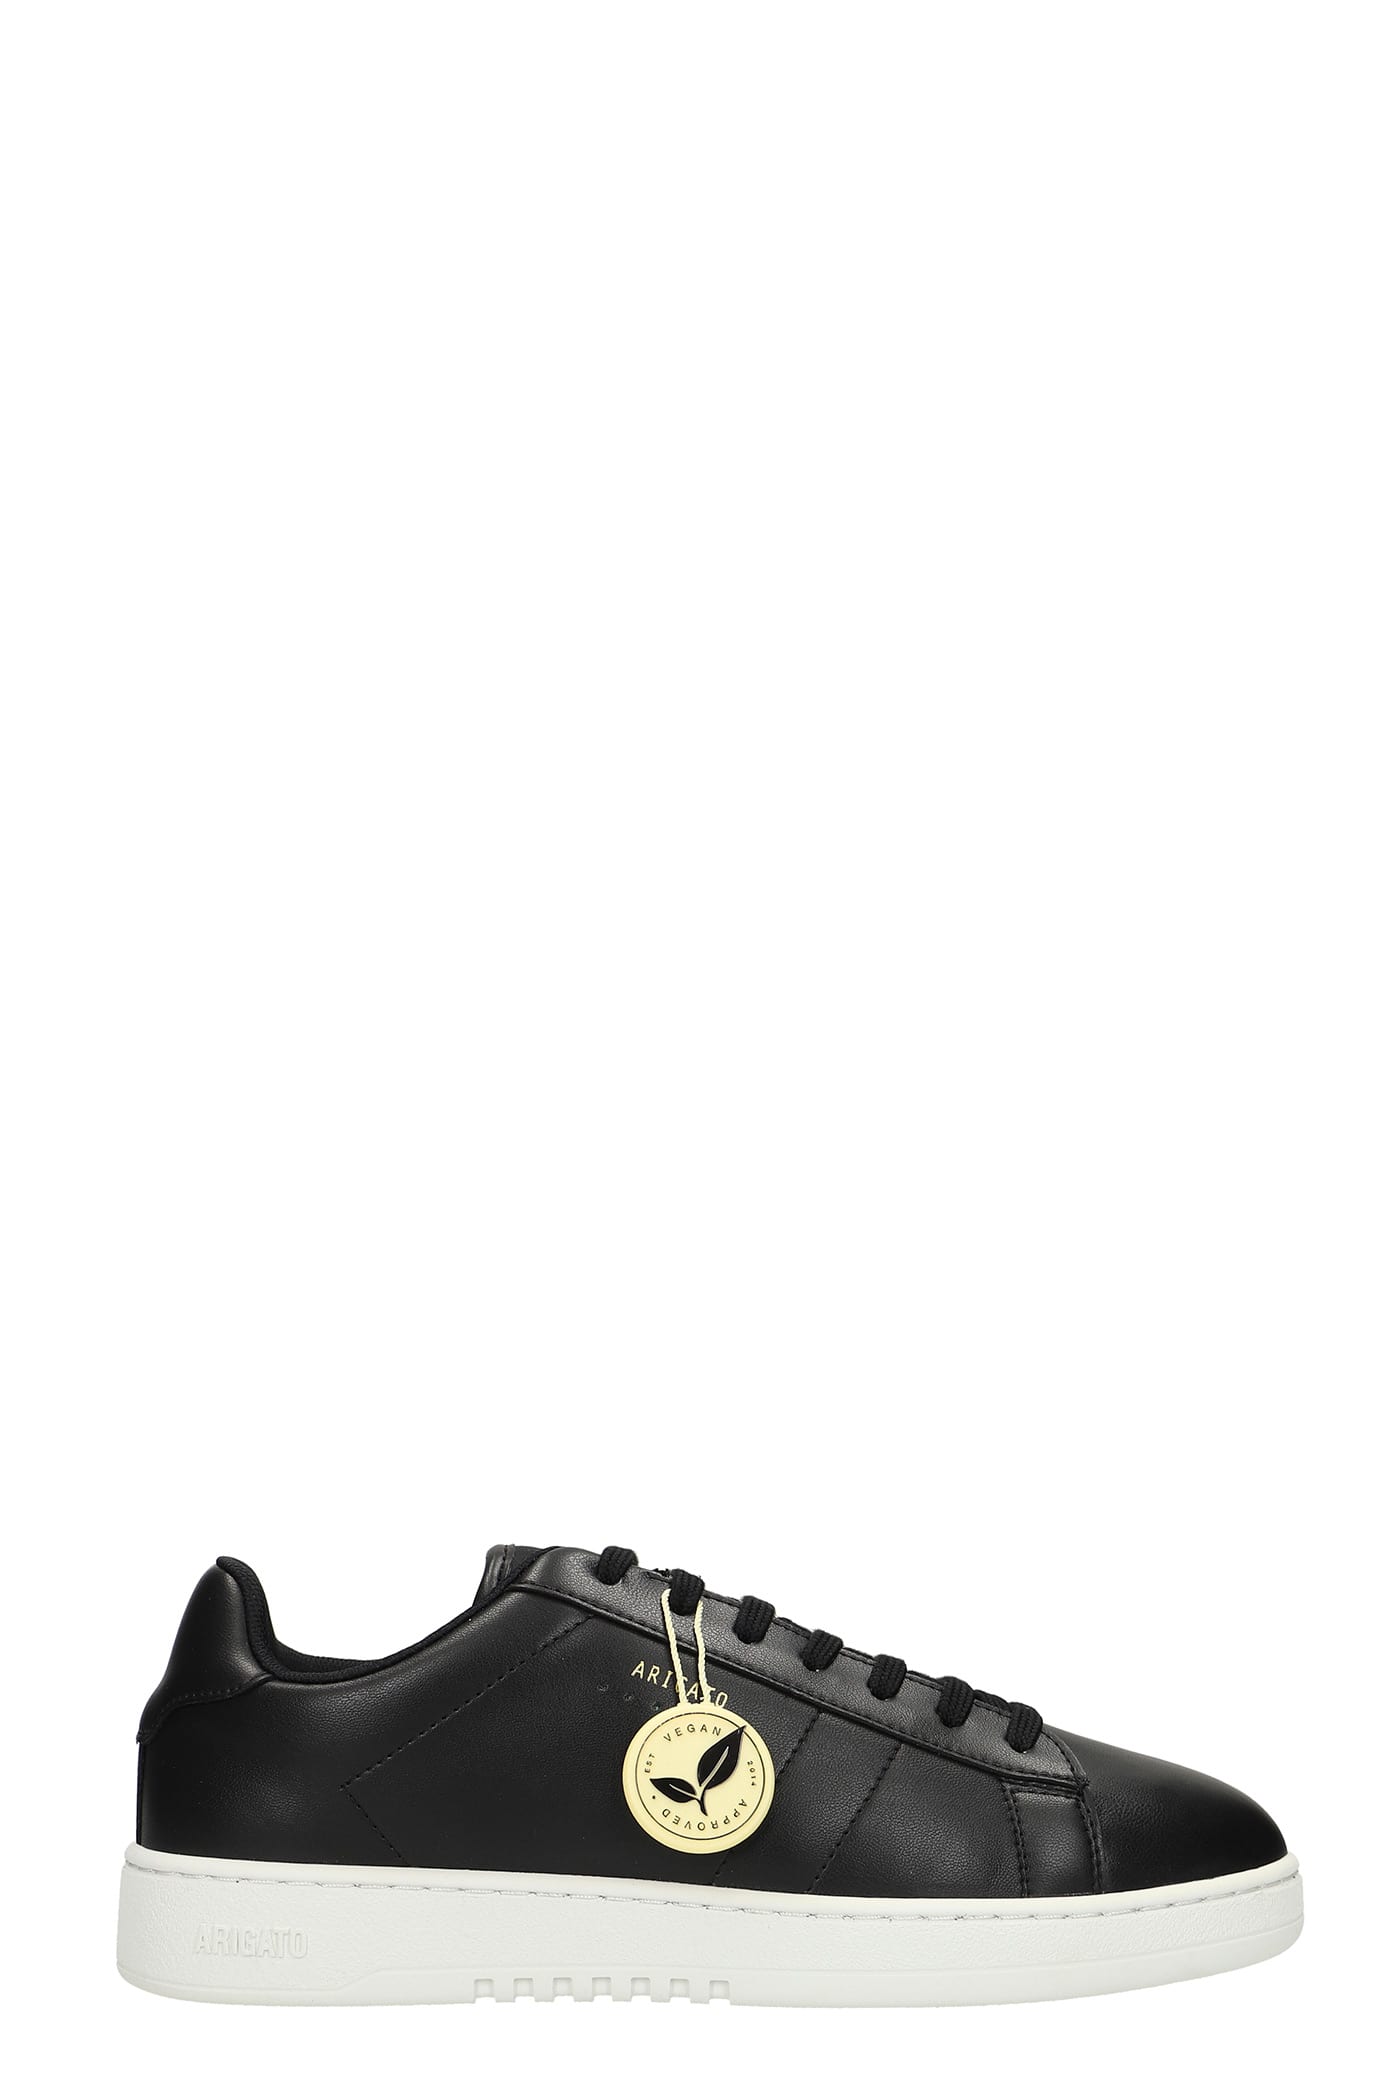 Axel Arigato Hooper Sneakers In Black Leather